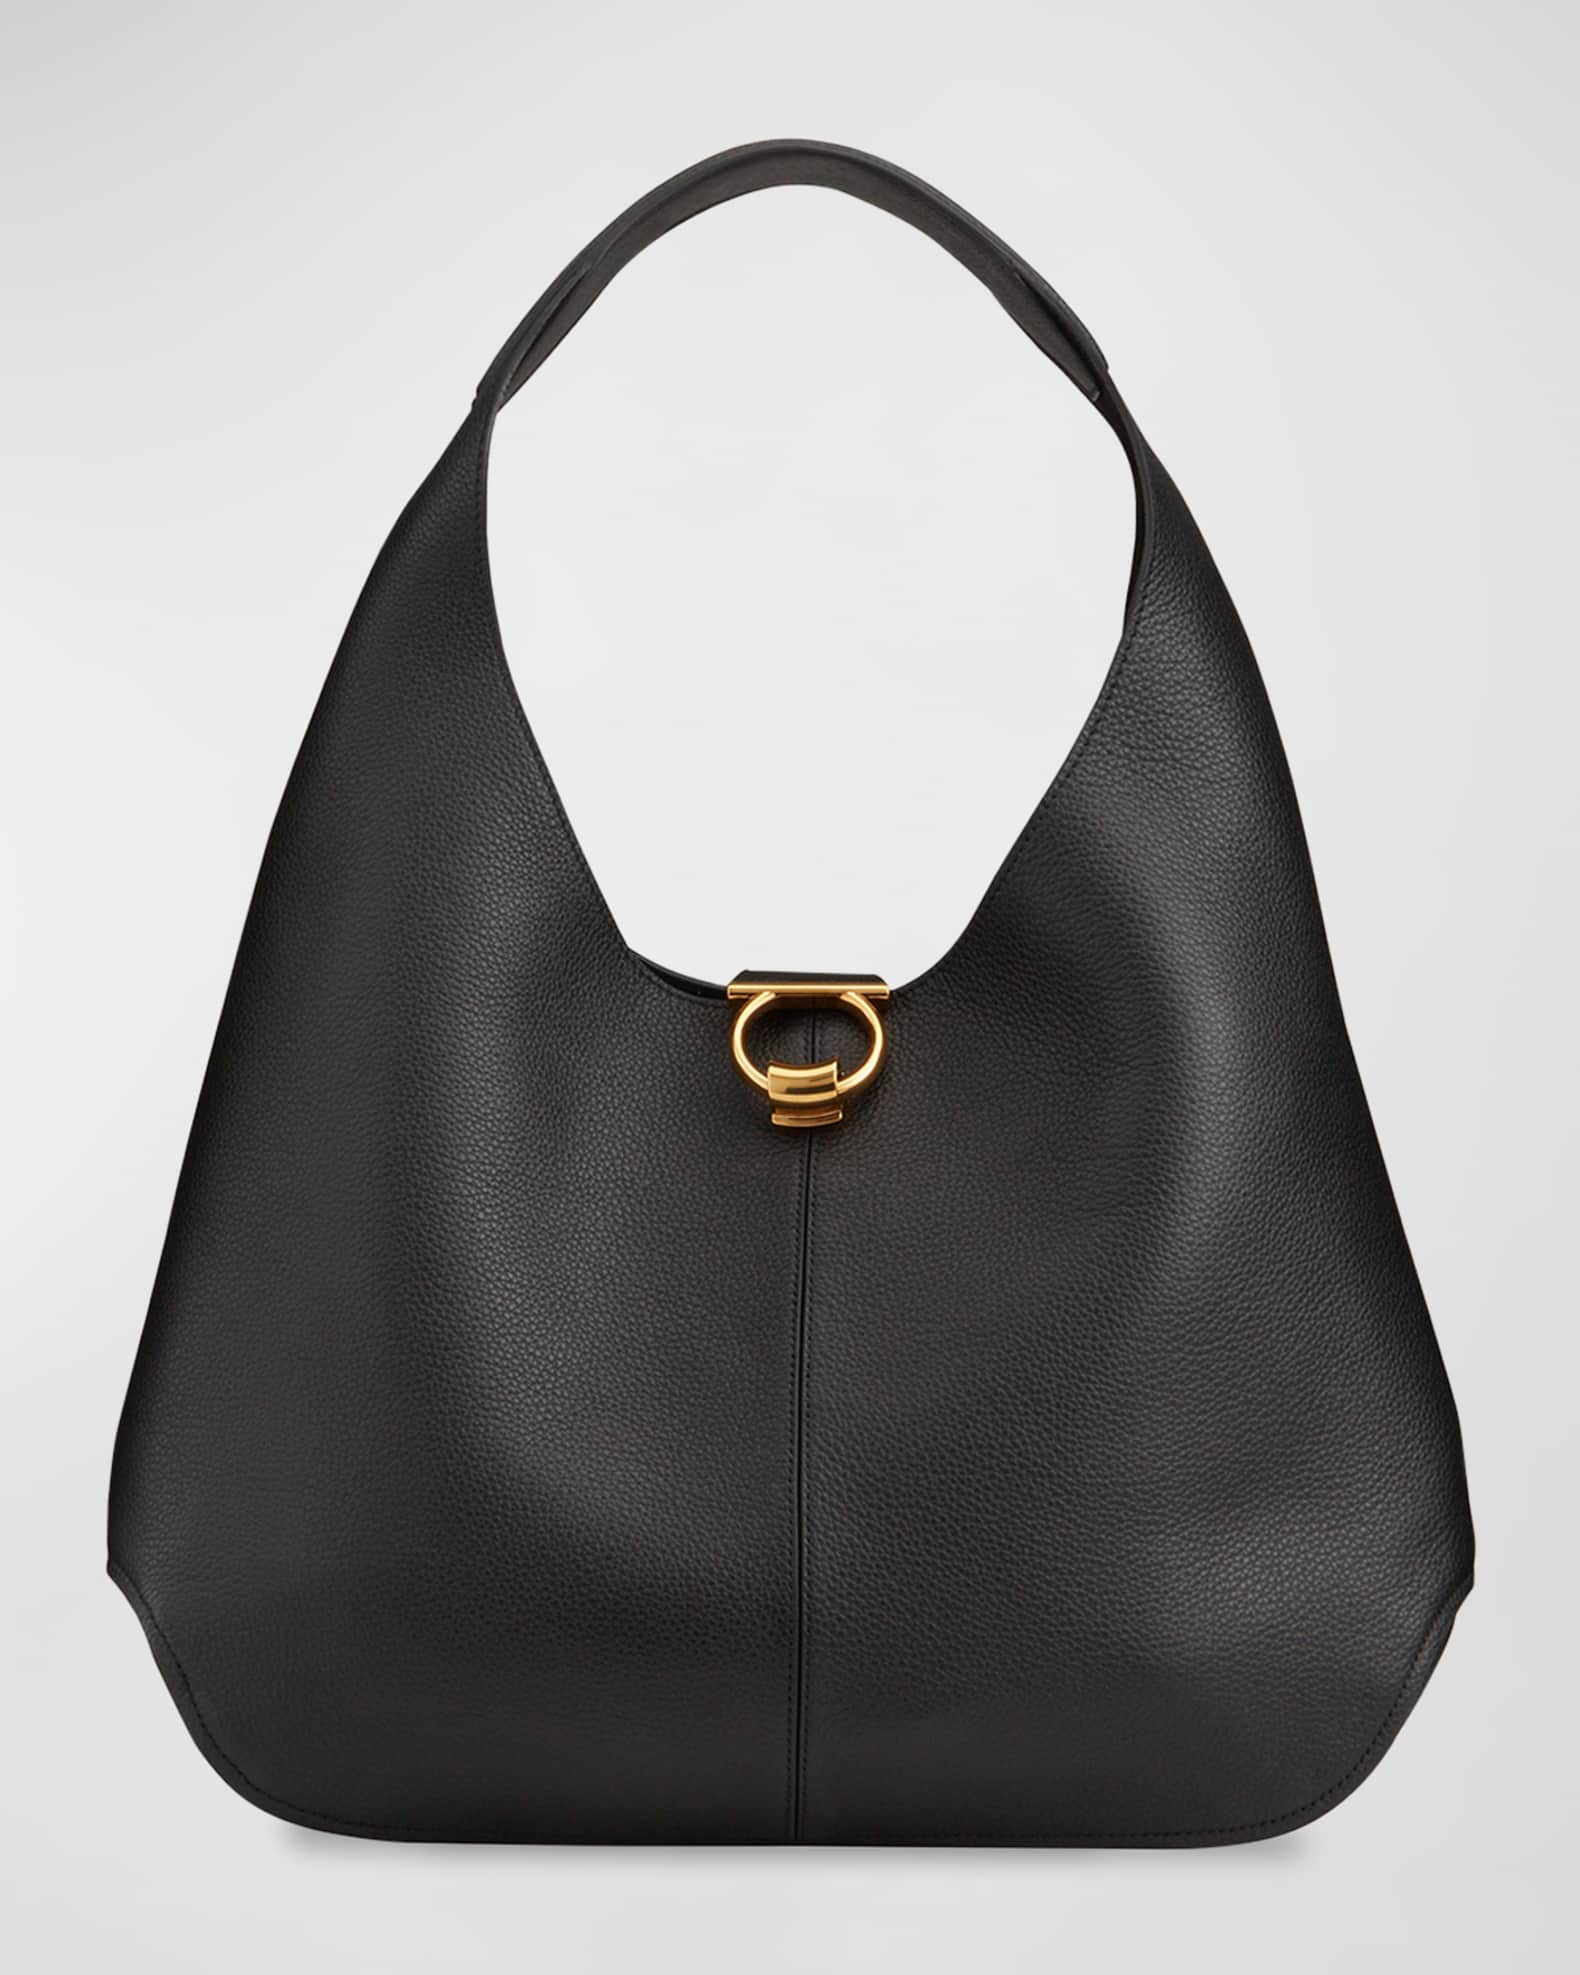 Ferragamo Margot Gancio Pebbled Leather Hobo Bag | Neiman Marcus